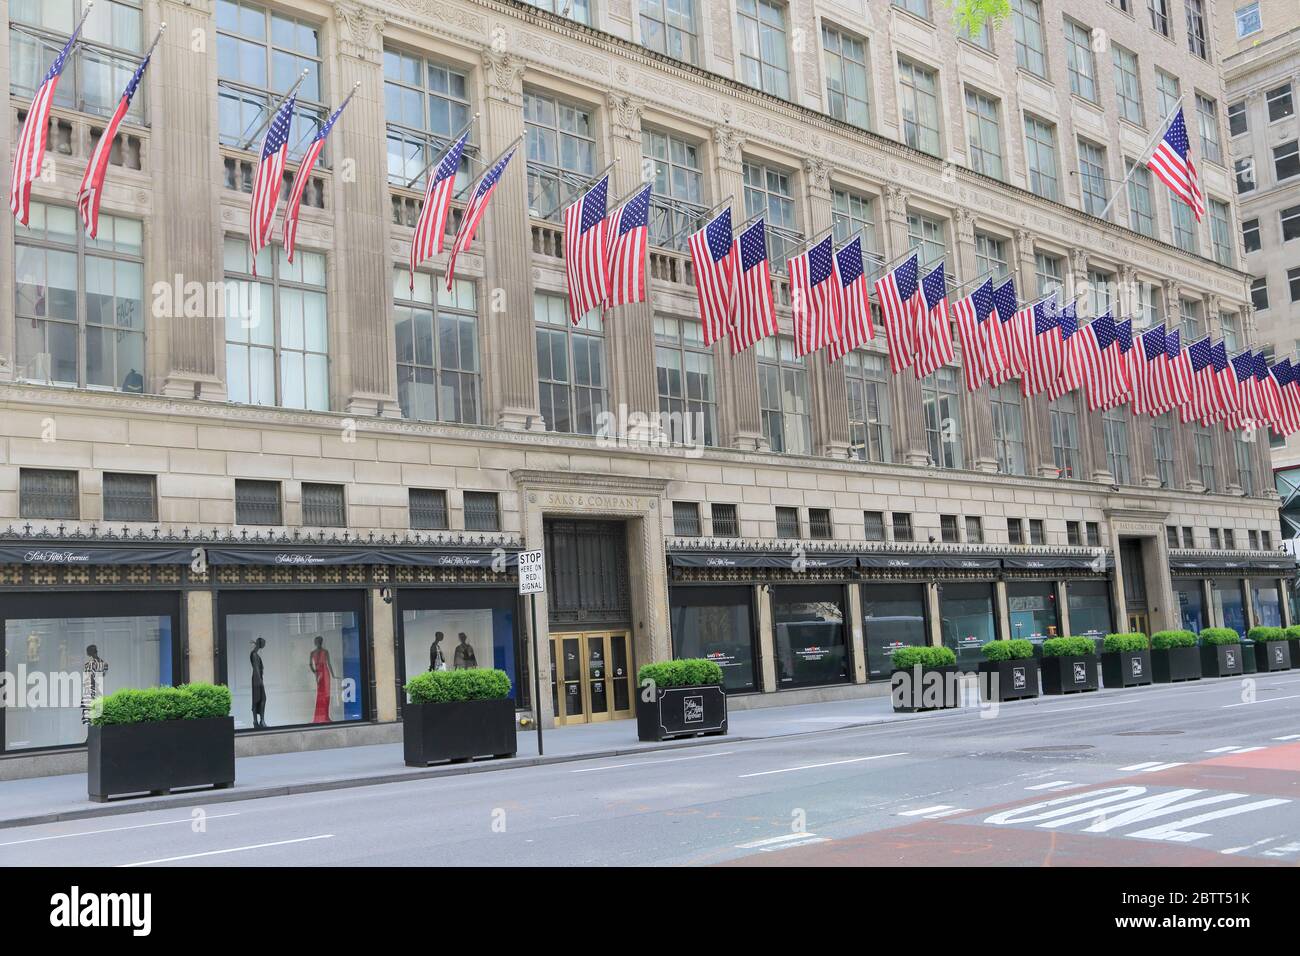 Saks Fifth Avenue Department Store, closed during Coronavirus Lockdown, Empty 5th Avenue, New York City, USA May 2020 Stock Photo